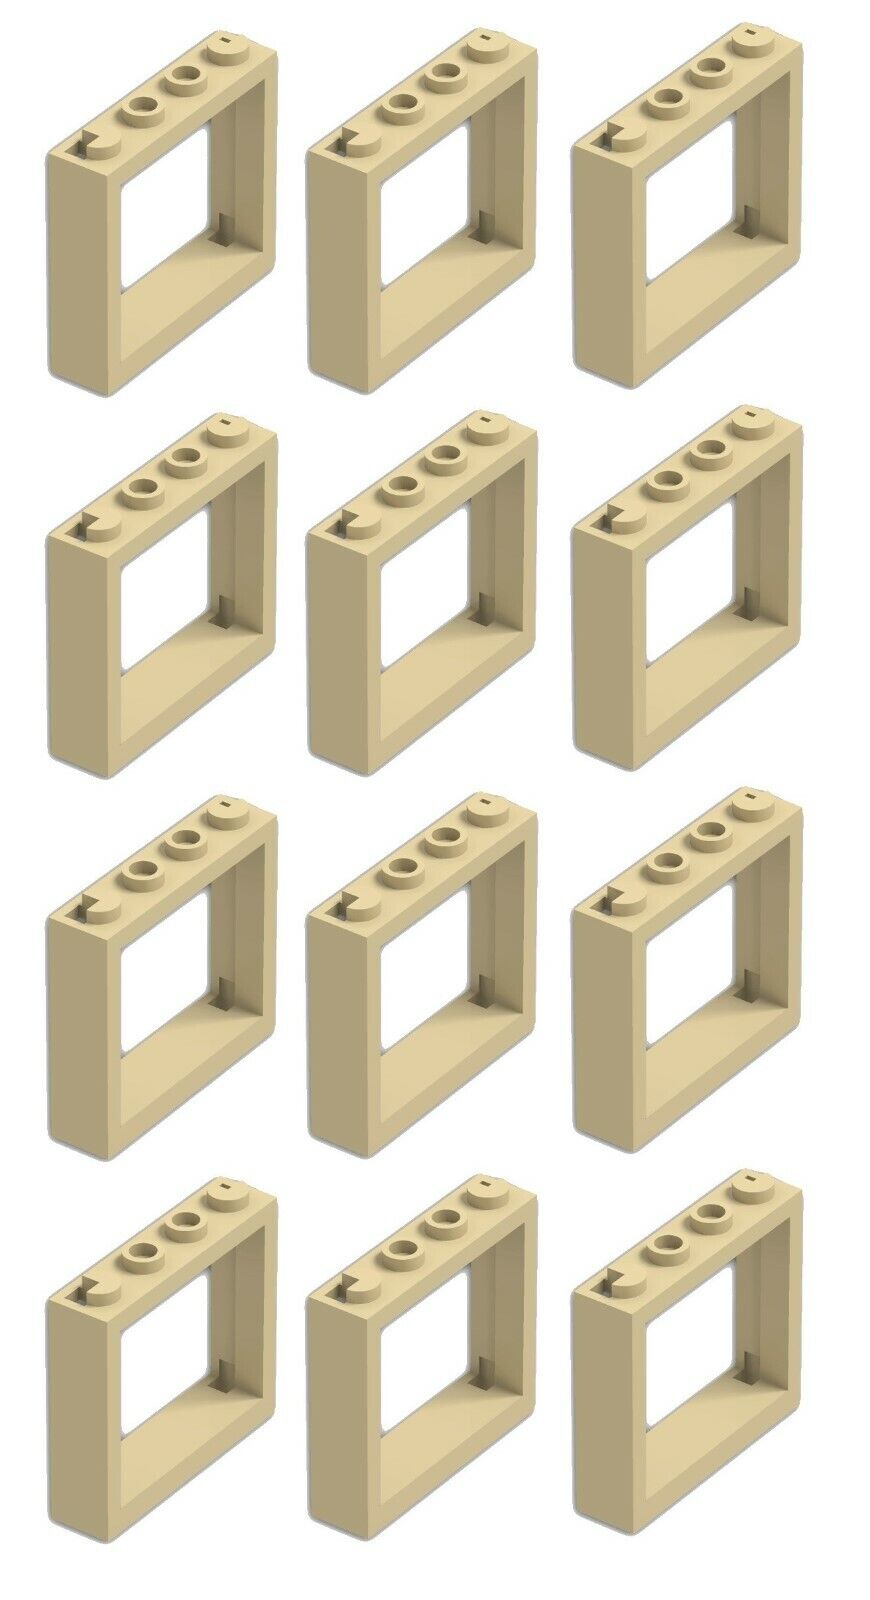 2x window fenster window finestra 1x4x3 pane 3854 60594 tan yellow Lego